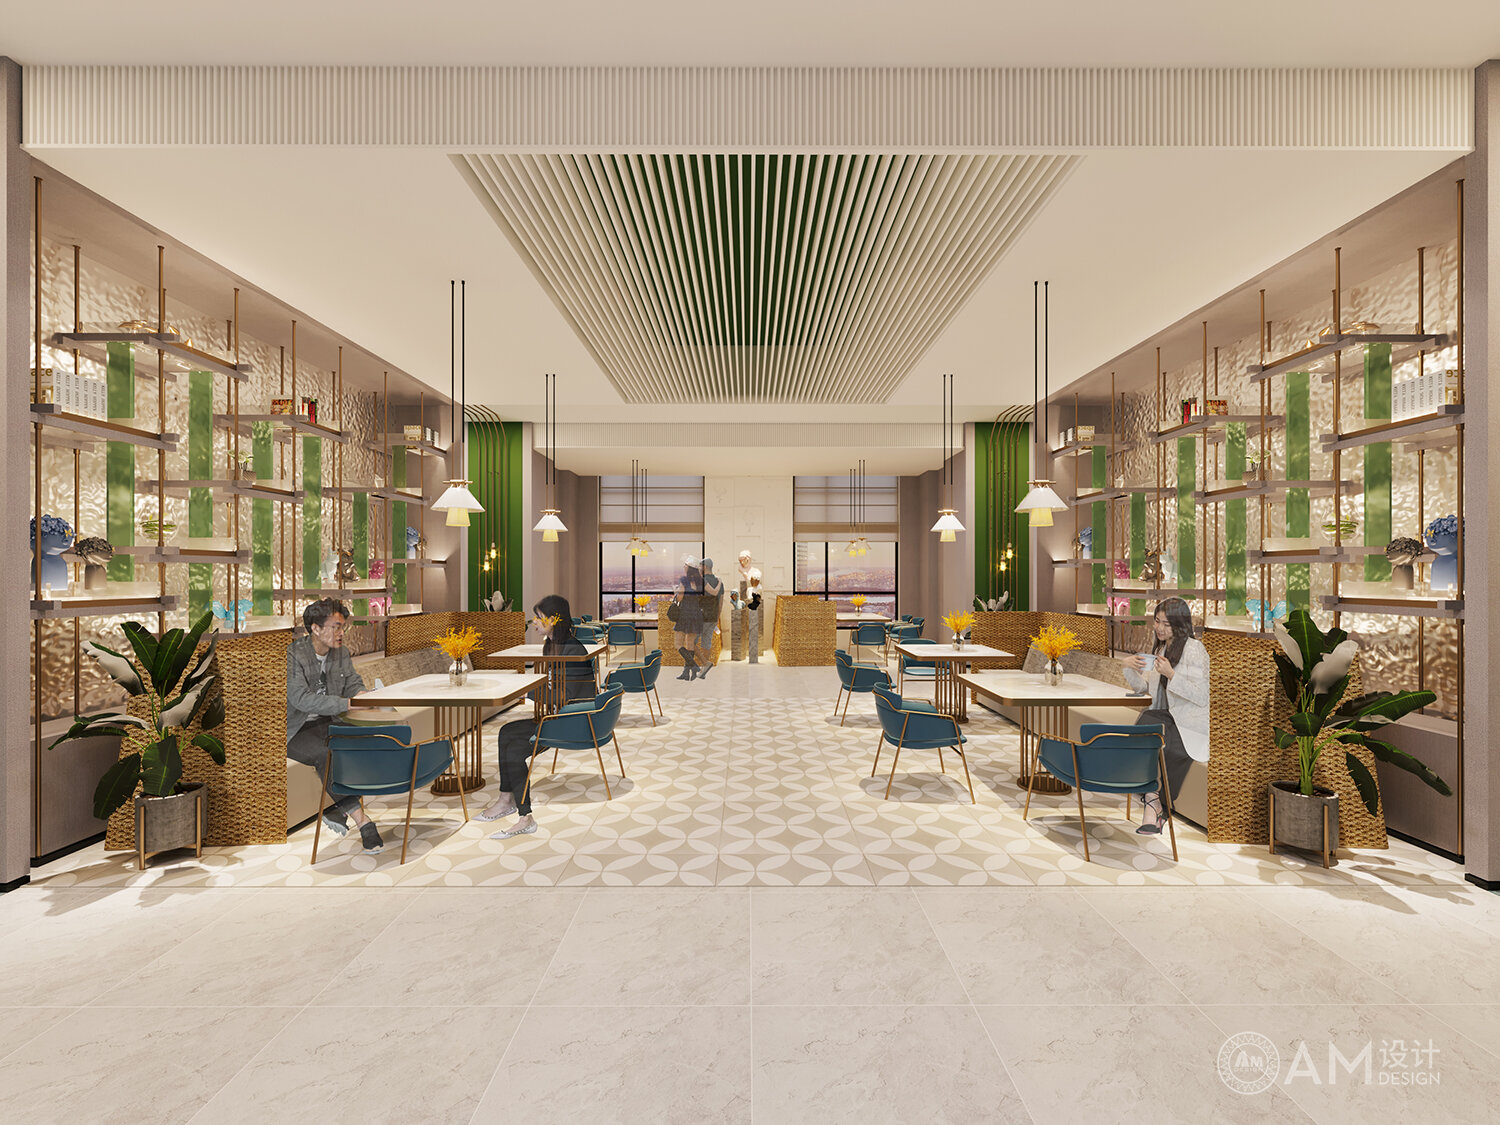 AM DESIGN | Rest area design of Jianguo Hotel, Weinan, Shaanxi